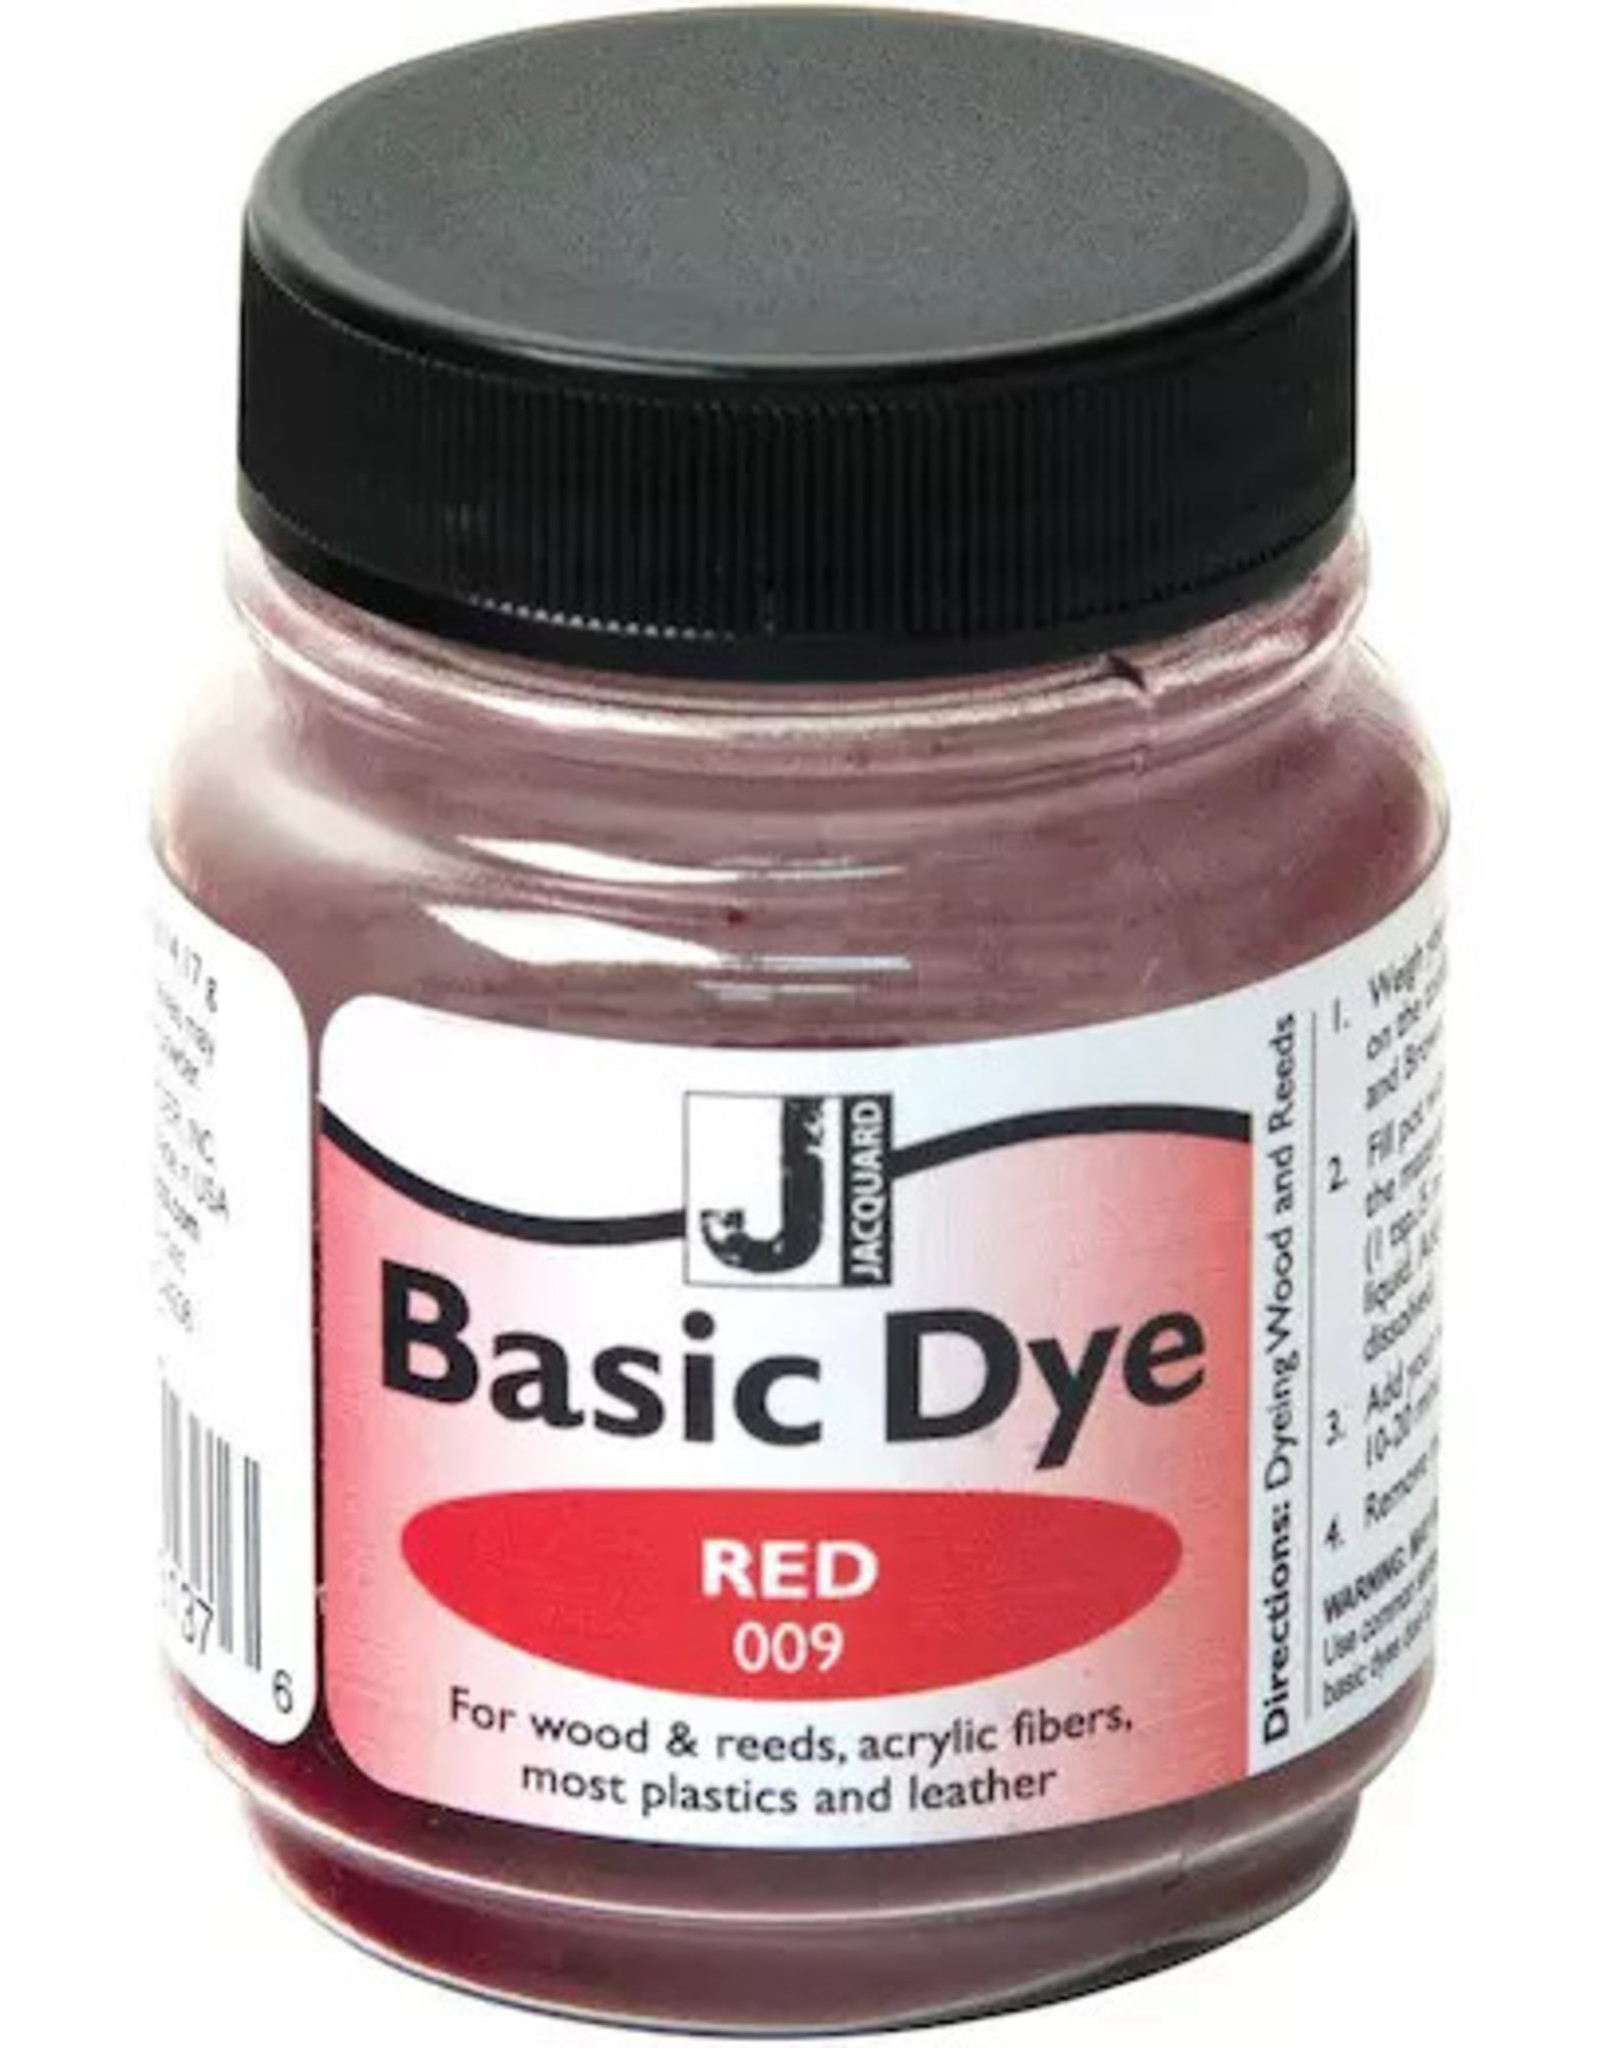 Jacquard Products Jacquard Basic Dye Red